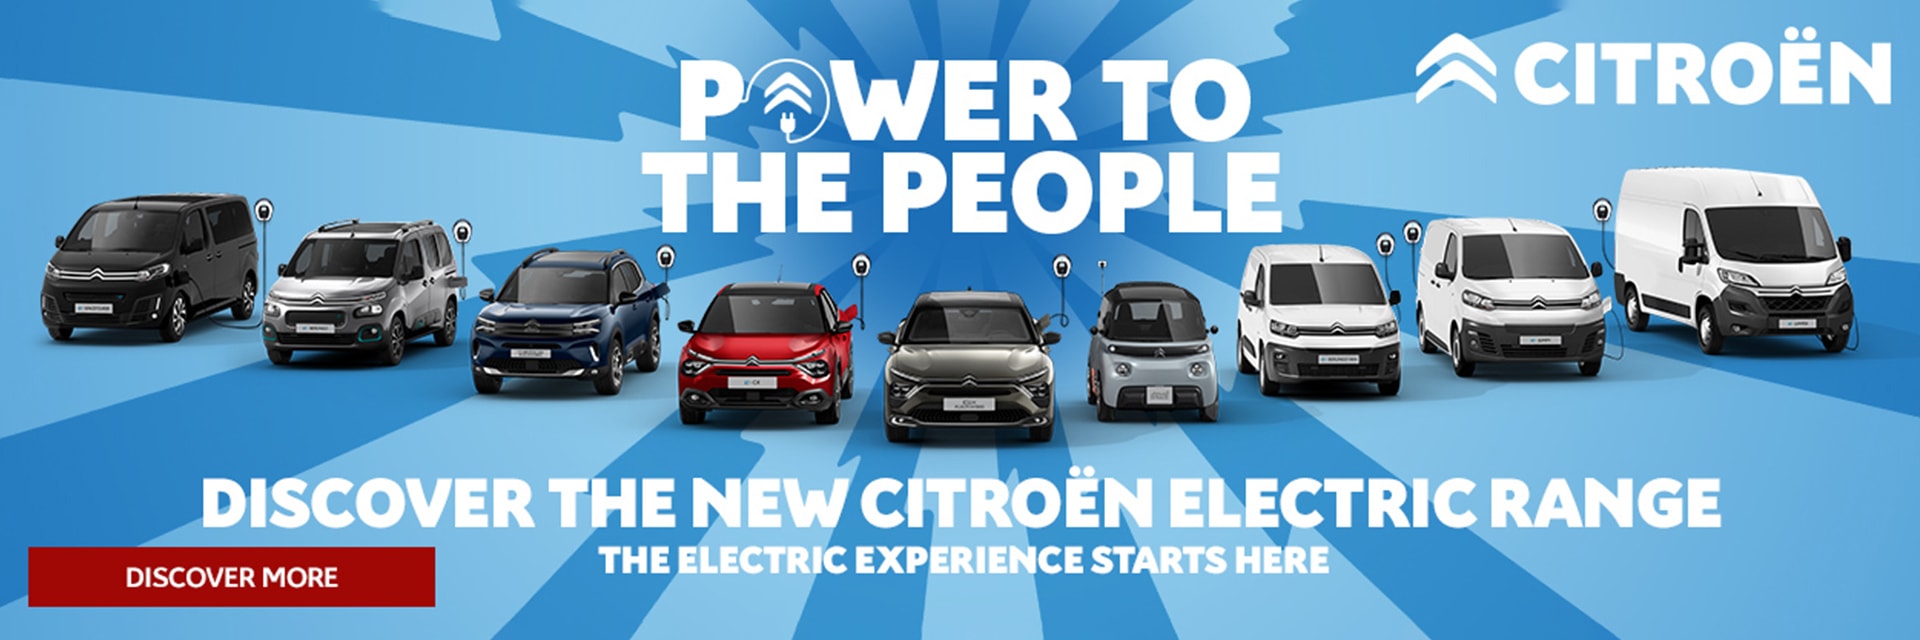 Citroën Electric Range 